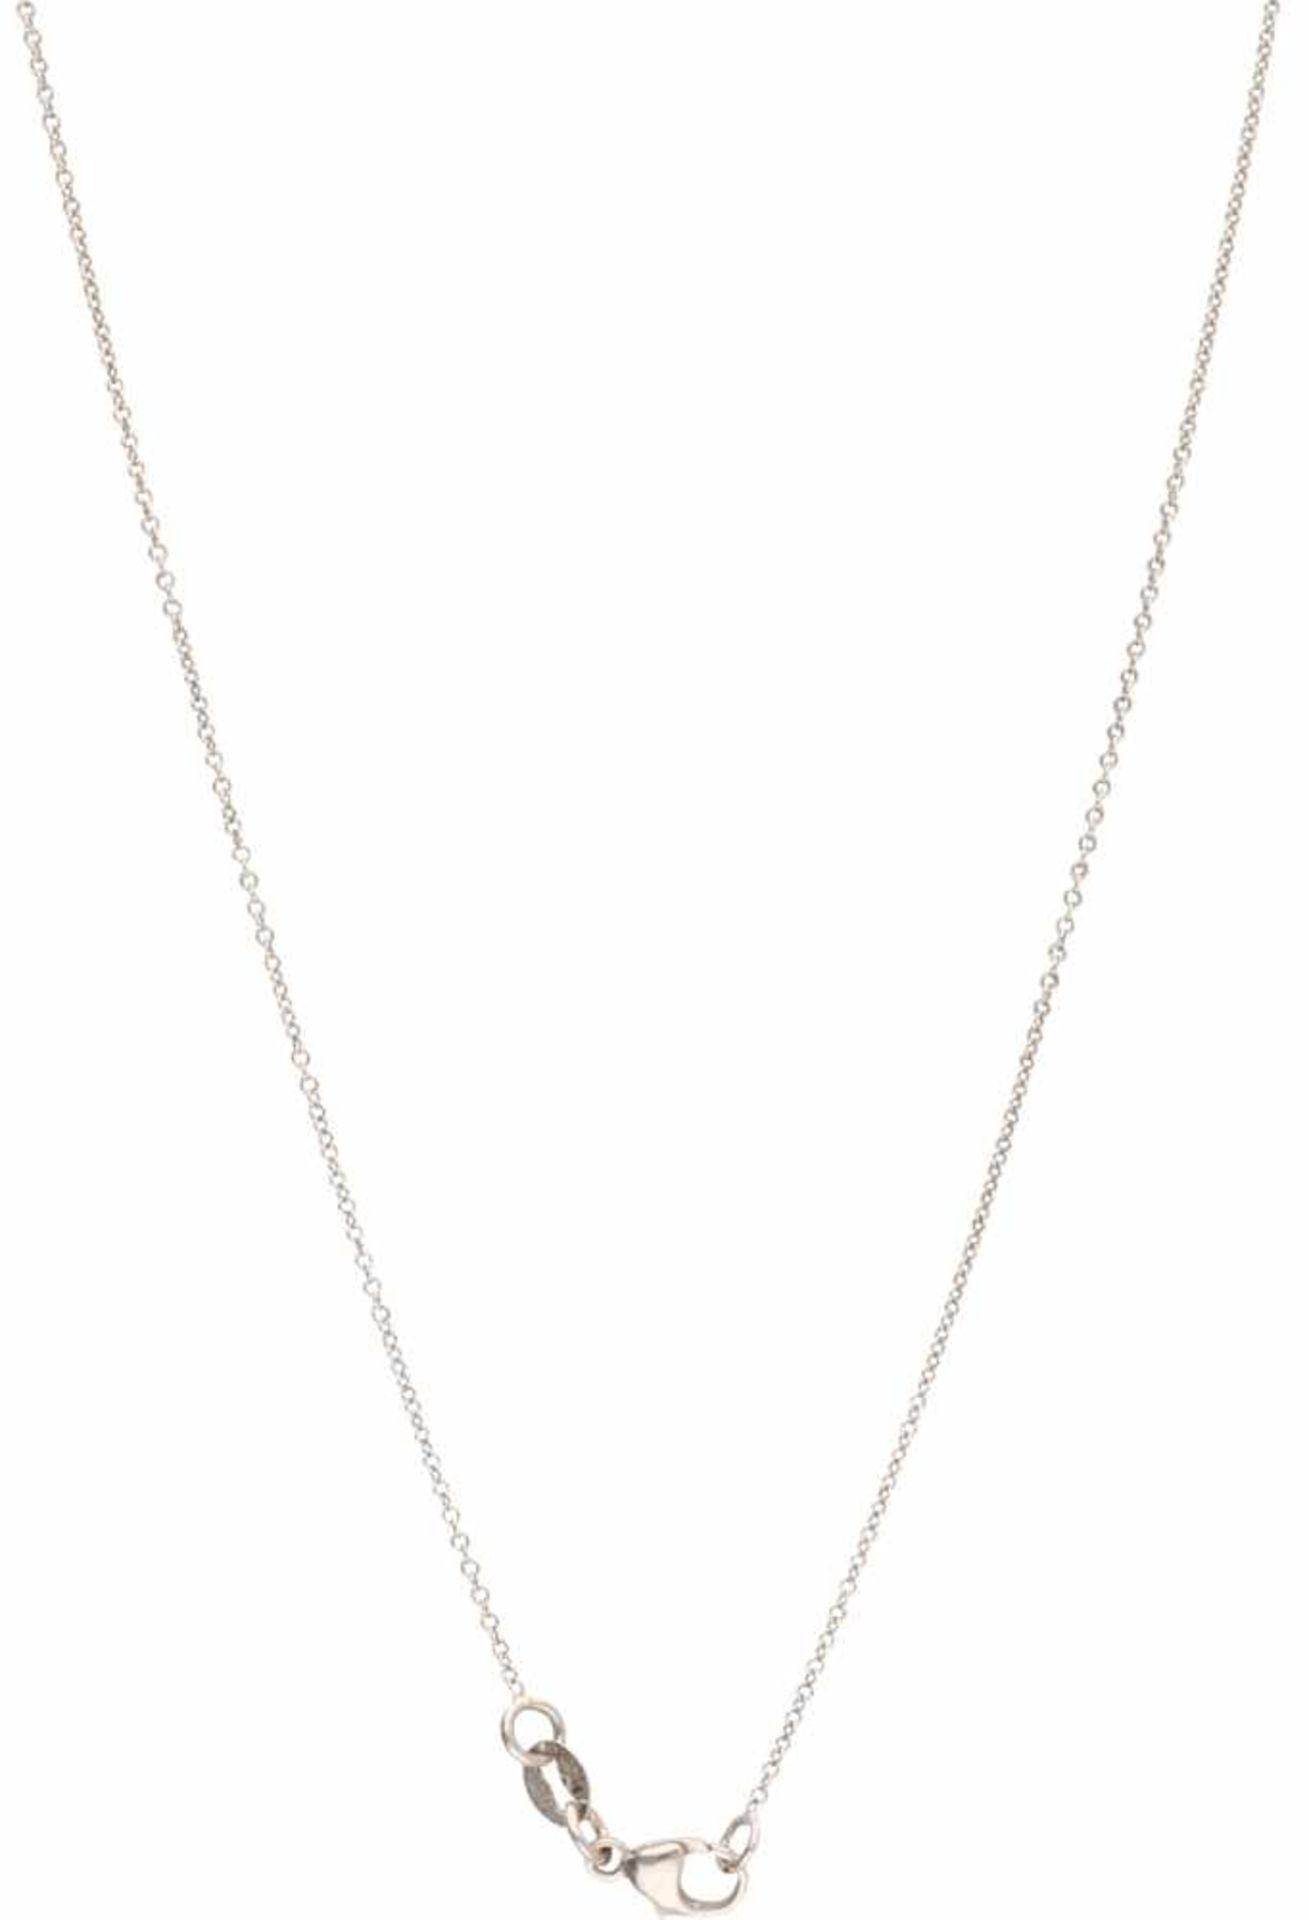 Necklace with heart-shaped pendant white gold, ca. 0.31 carat diamond - 18 ct. - Bild 3 aus 3